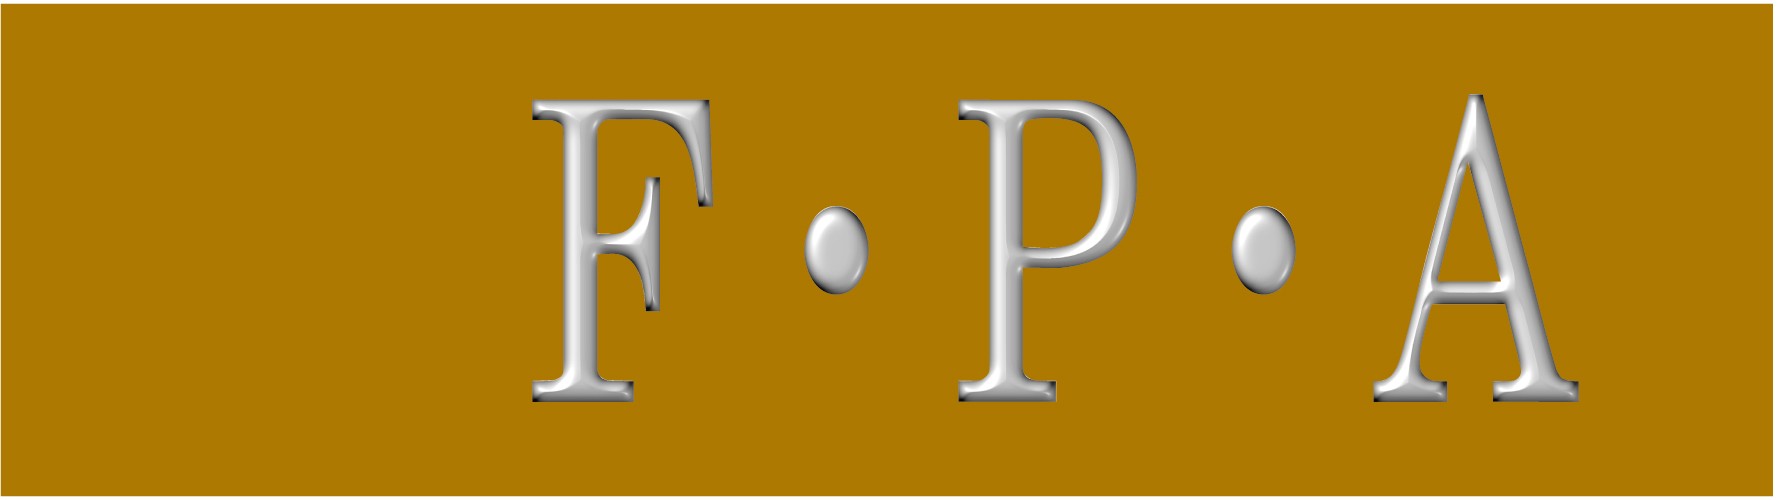 Fpa Financial Corporation Pte. Ltd. company logo